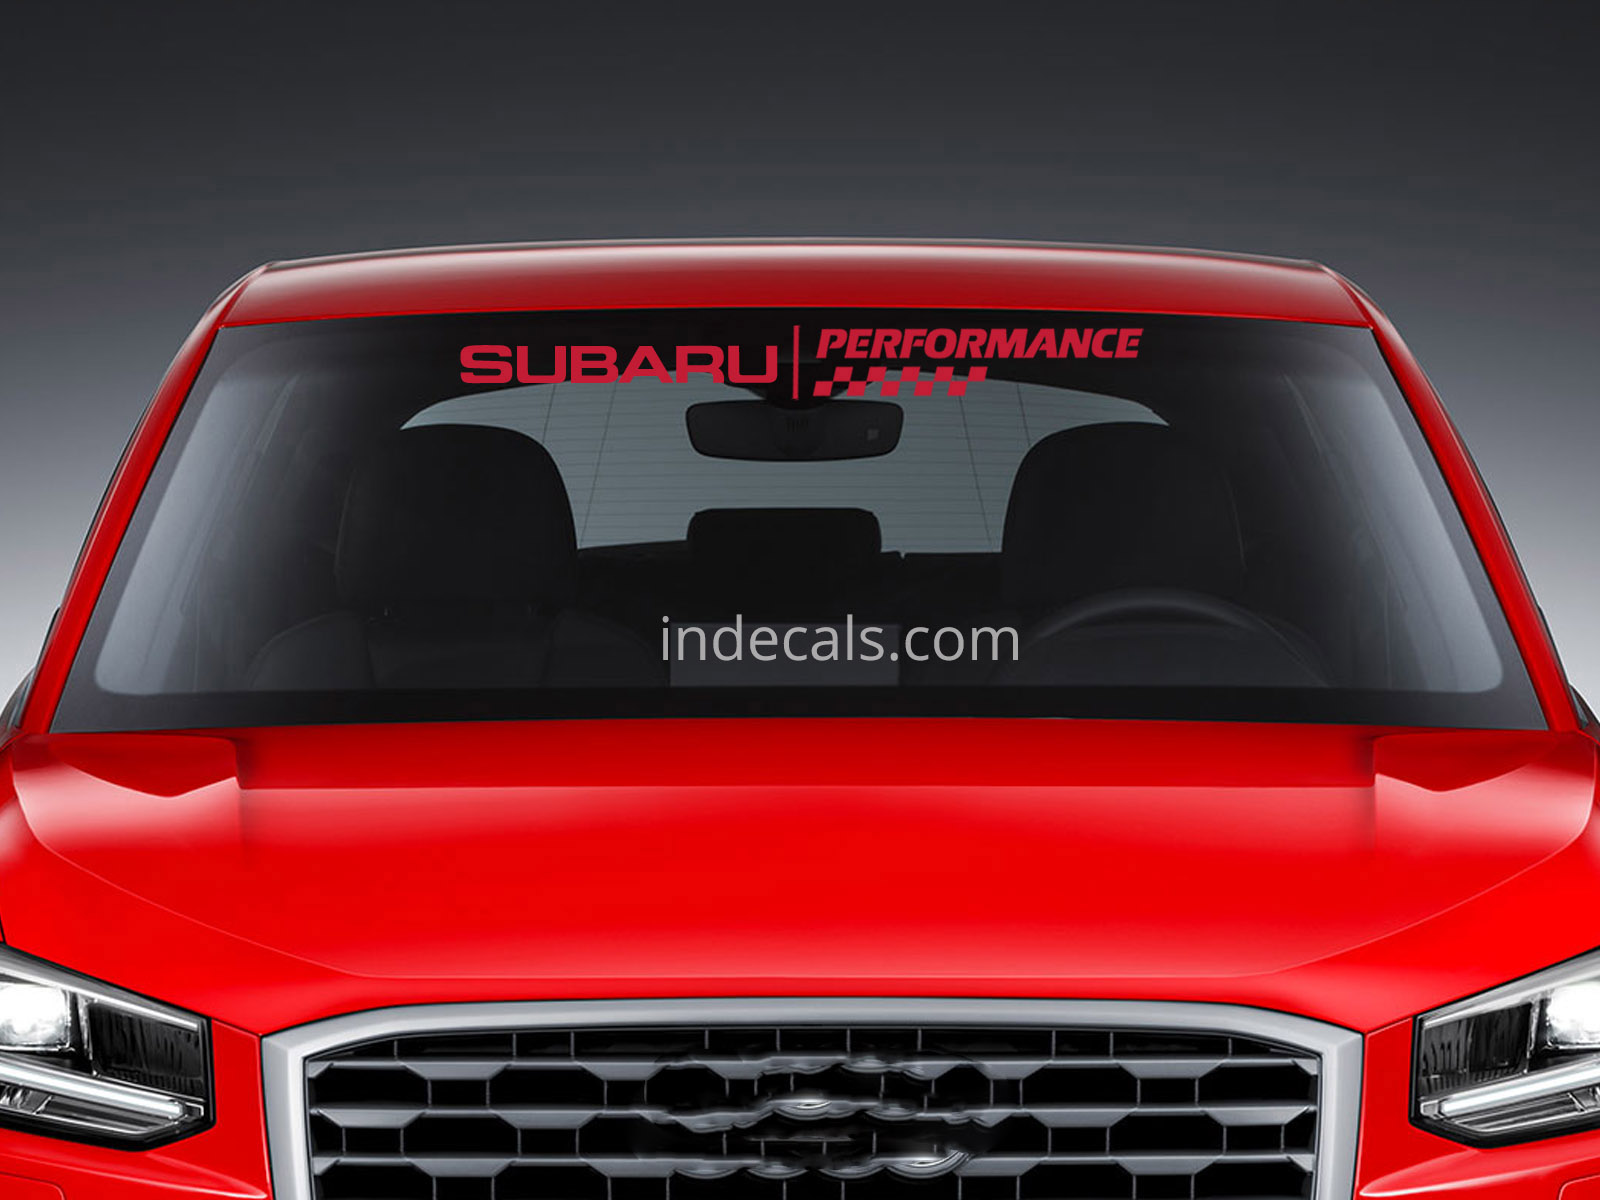 1 x Subaru Performance Sticker for Windshield or Back Window - Red